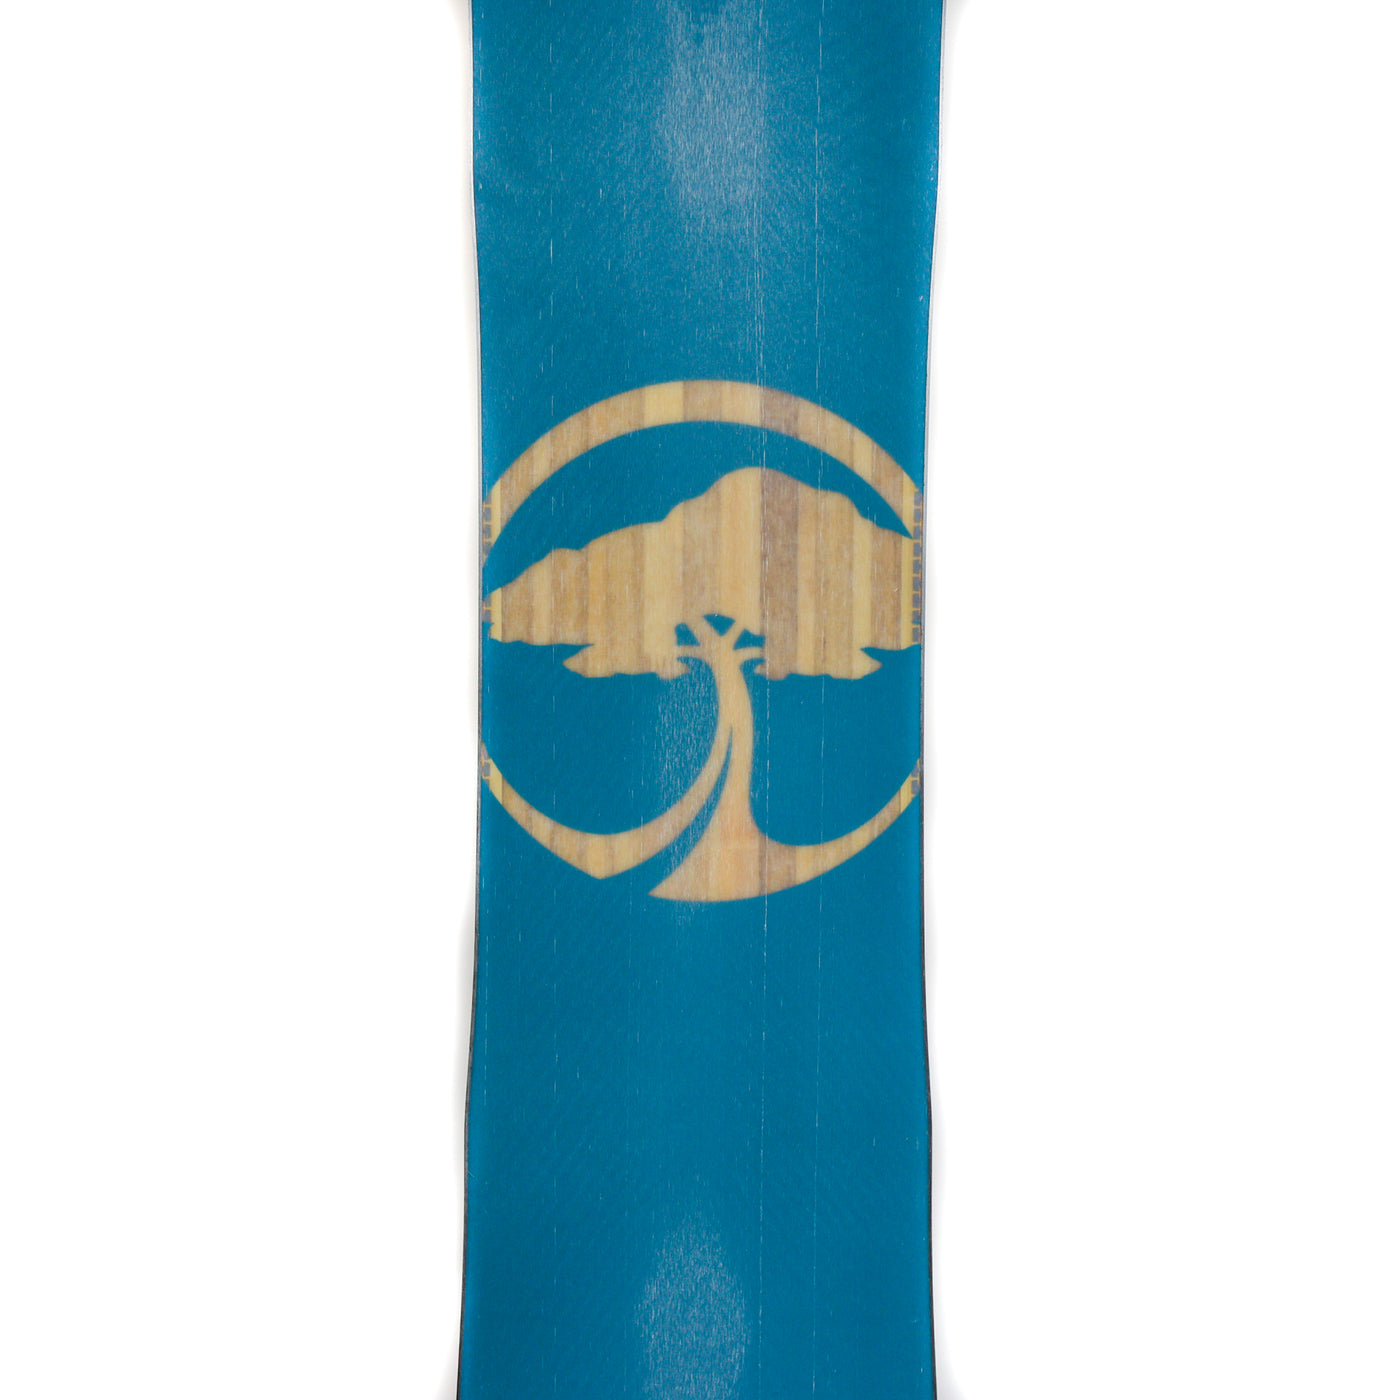 156cm Arbor Swoon Rocker Snowboard - Women’s 2020 | Used